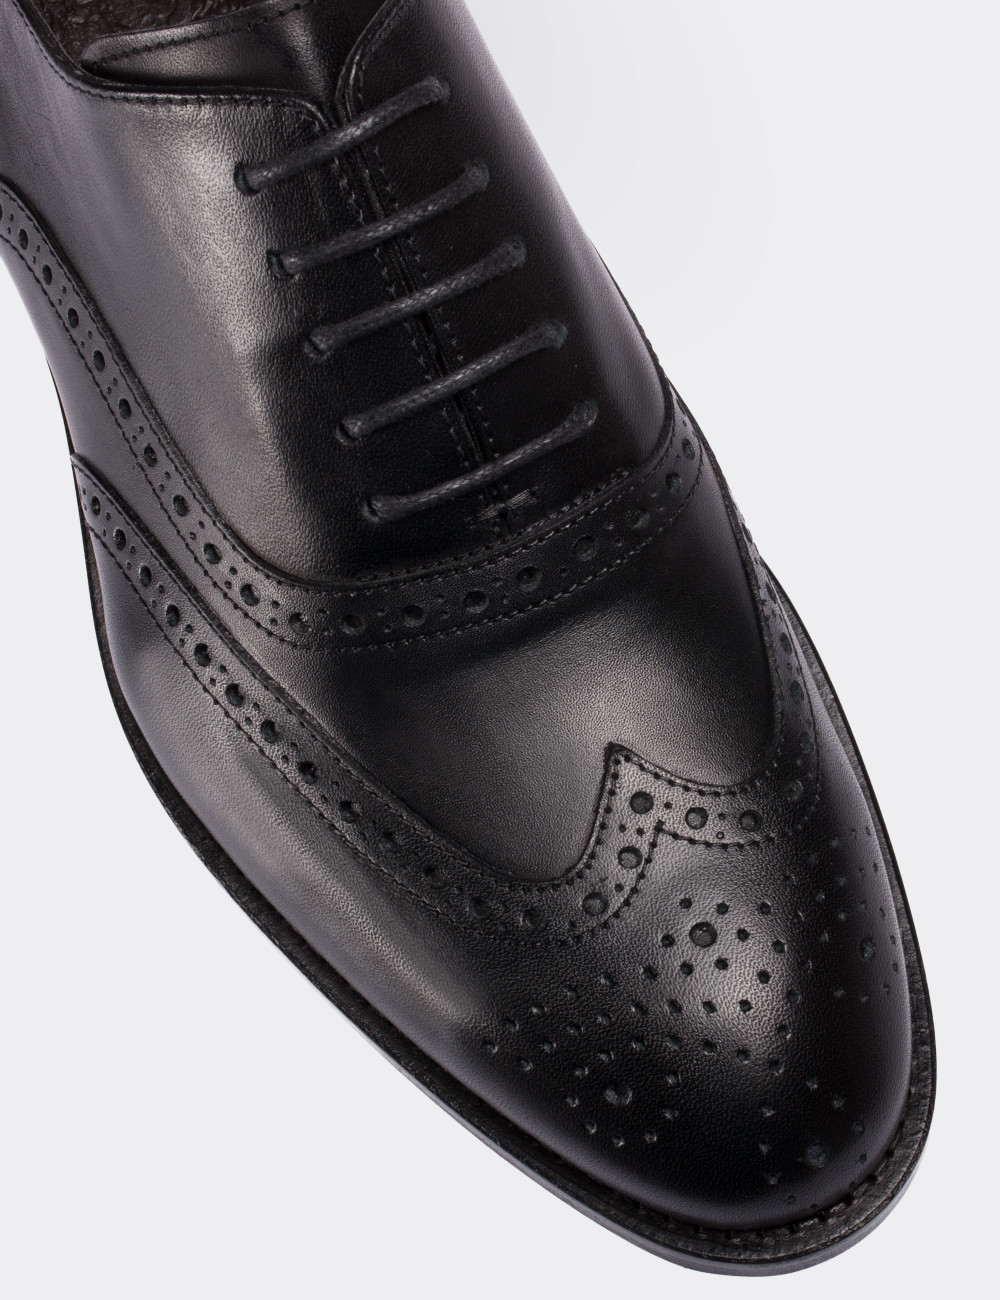 Black  Leather Oxford Formal Shoe - 01785MSYHM03